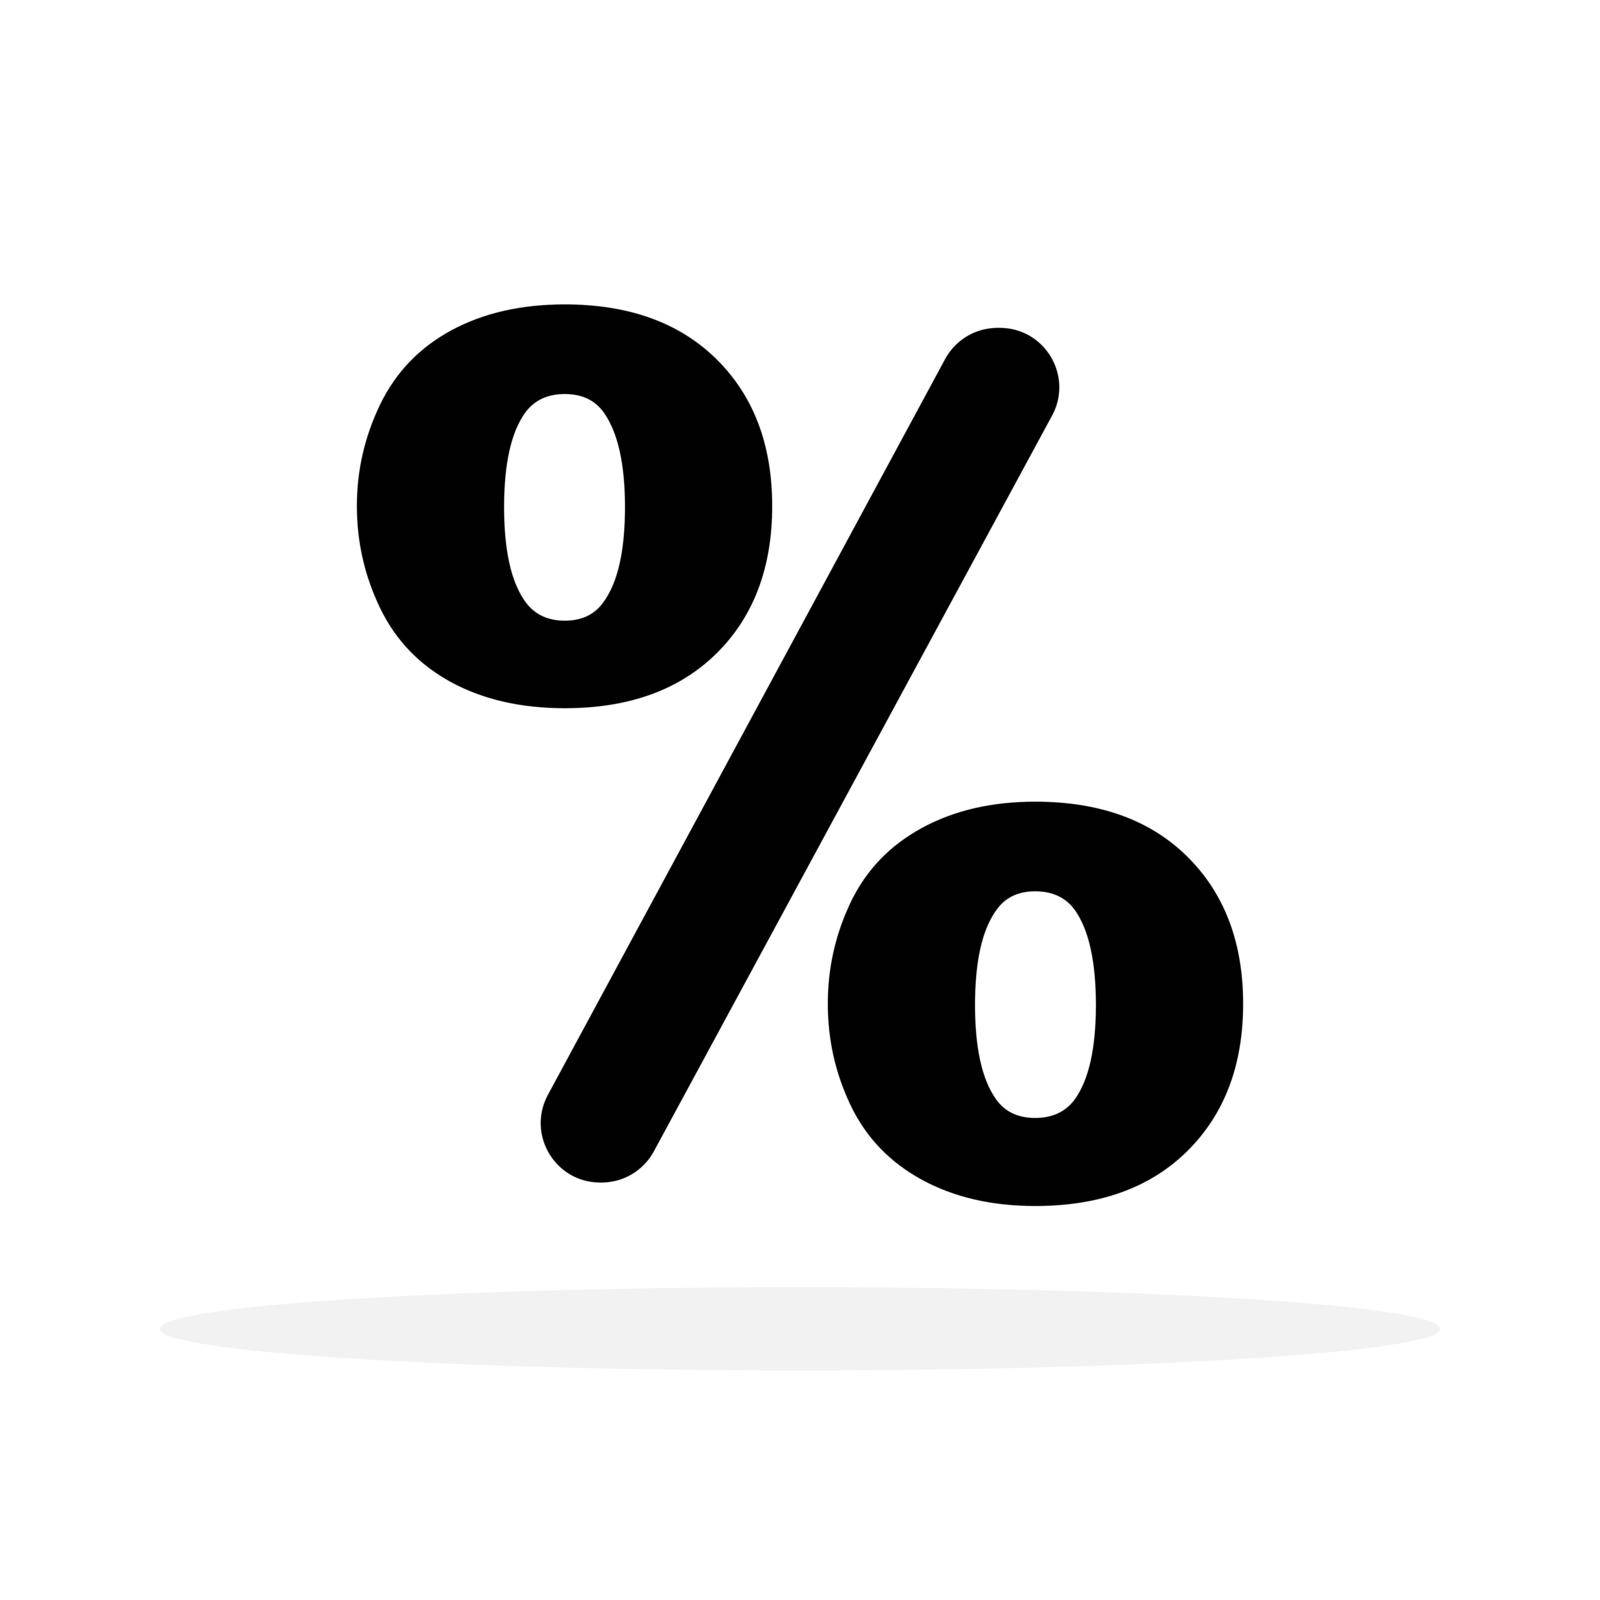 Percentage icon. Linear percentage icon isolated. Sale percentage symbol. Conceptual business icon. Vector illustration